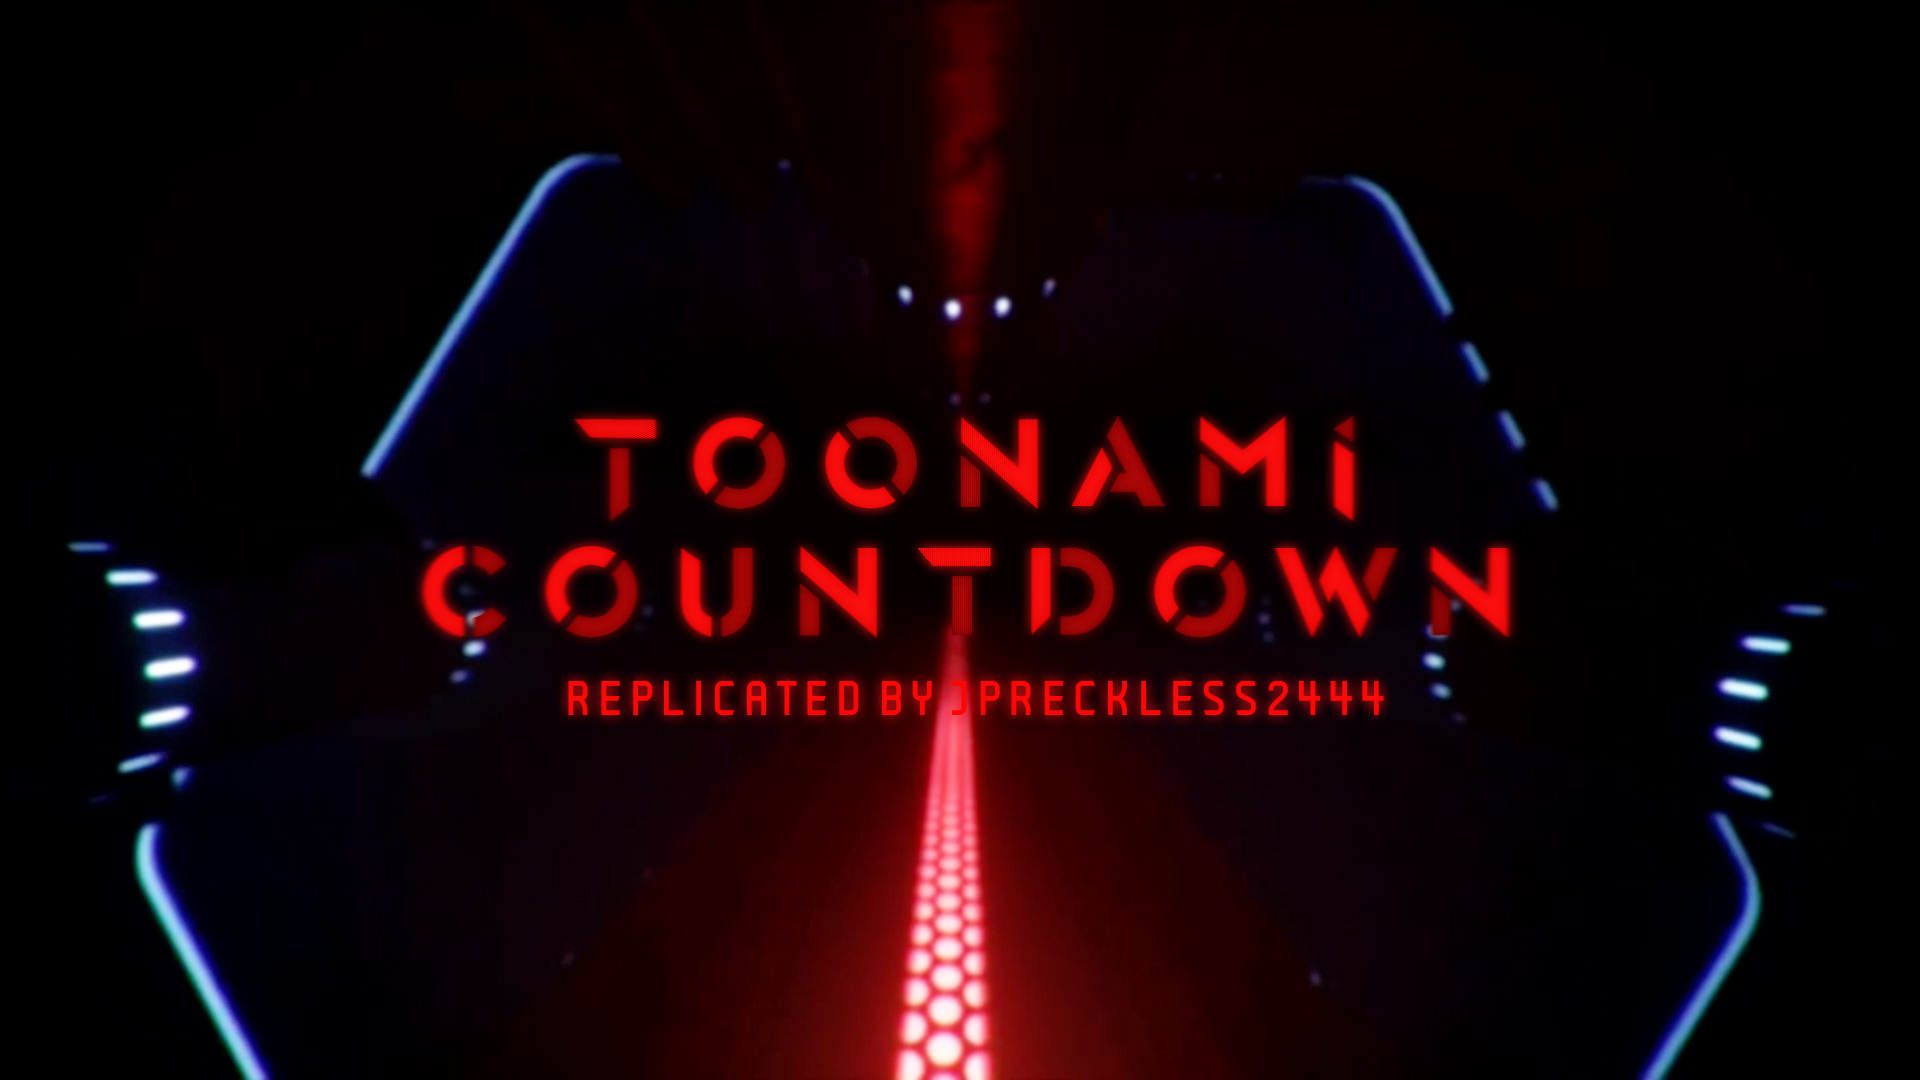 1920x1080 Toonami Countdown Font by JPReckless2444